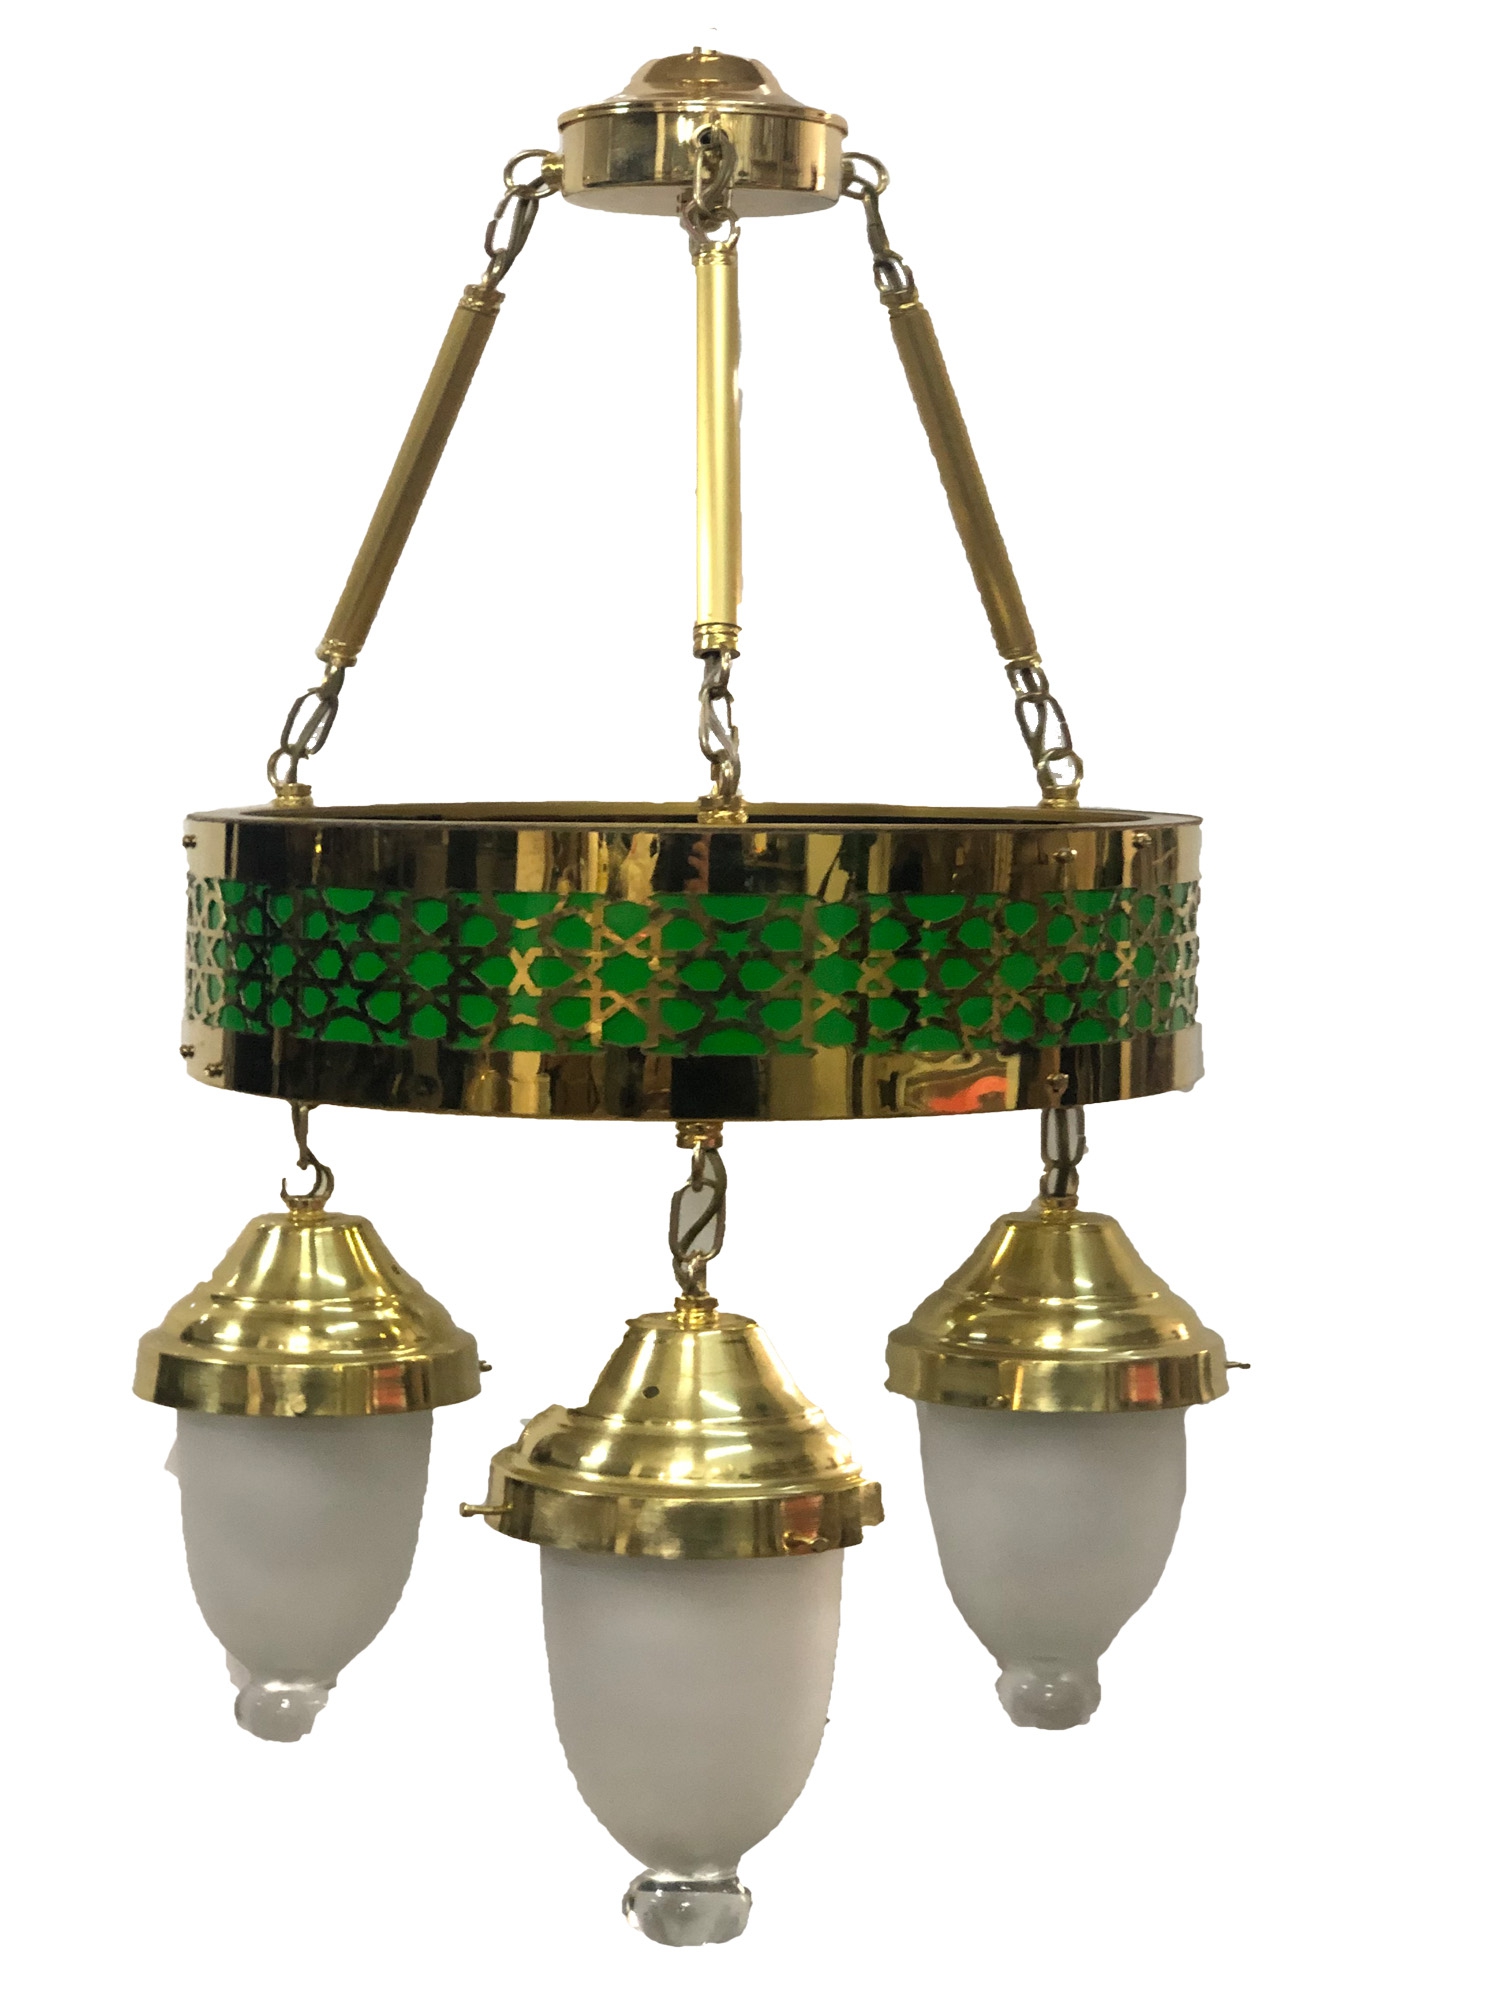 3 pendant chandeliers with tulip motifs